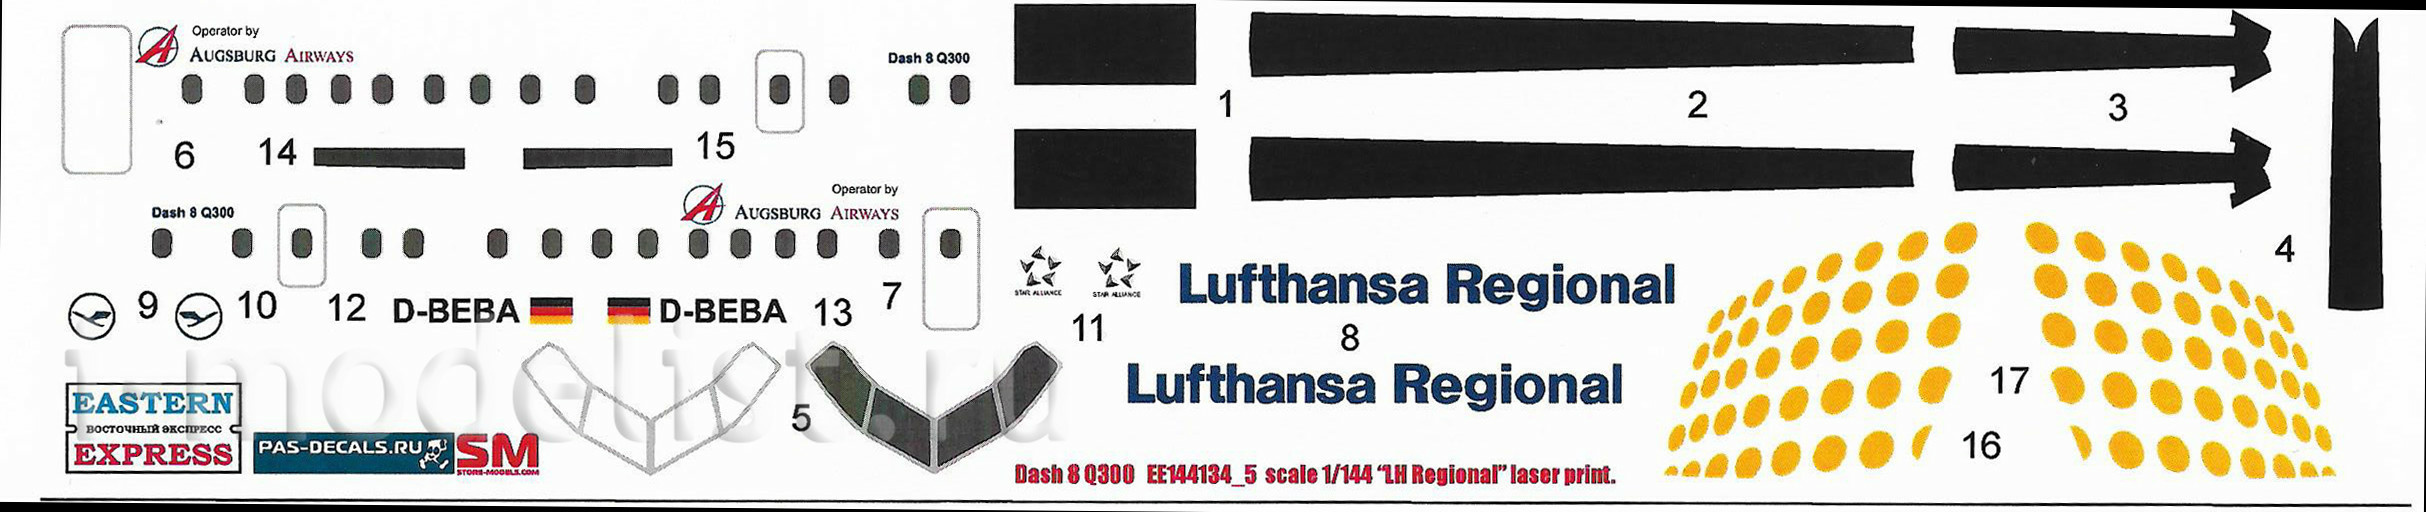 144134-5 Eastern Express 1/144 Scales Lufthansa Dash 8 Q300